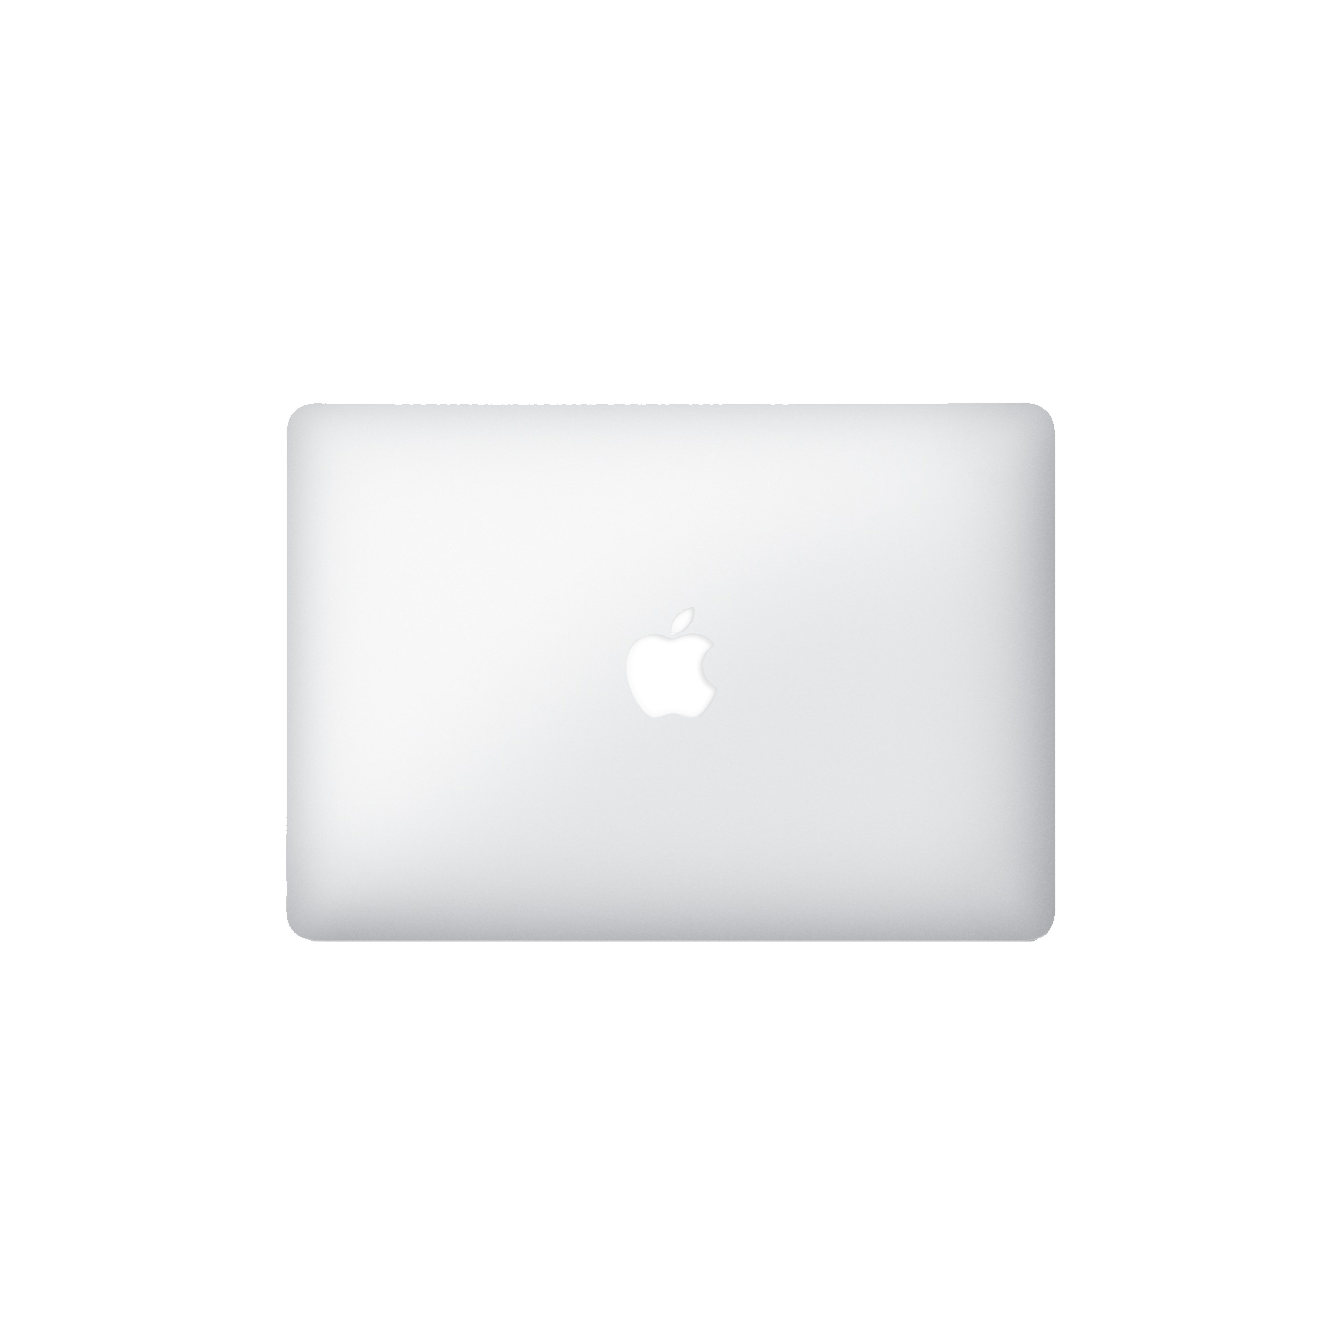 Refurbished MacBook Pro 13" i7 3.1 16gb 512gb 2015